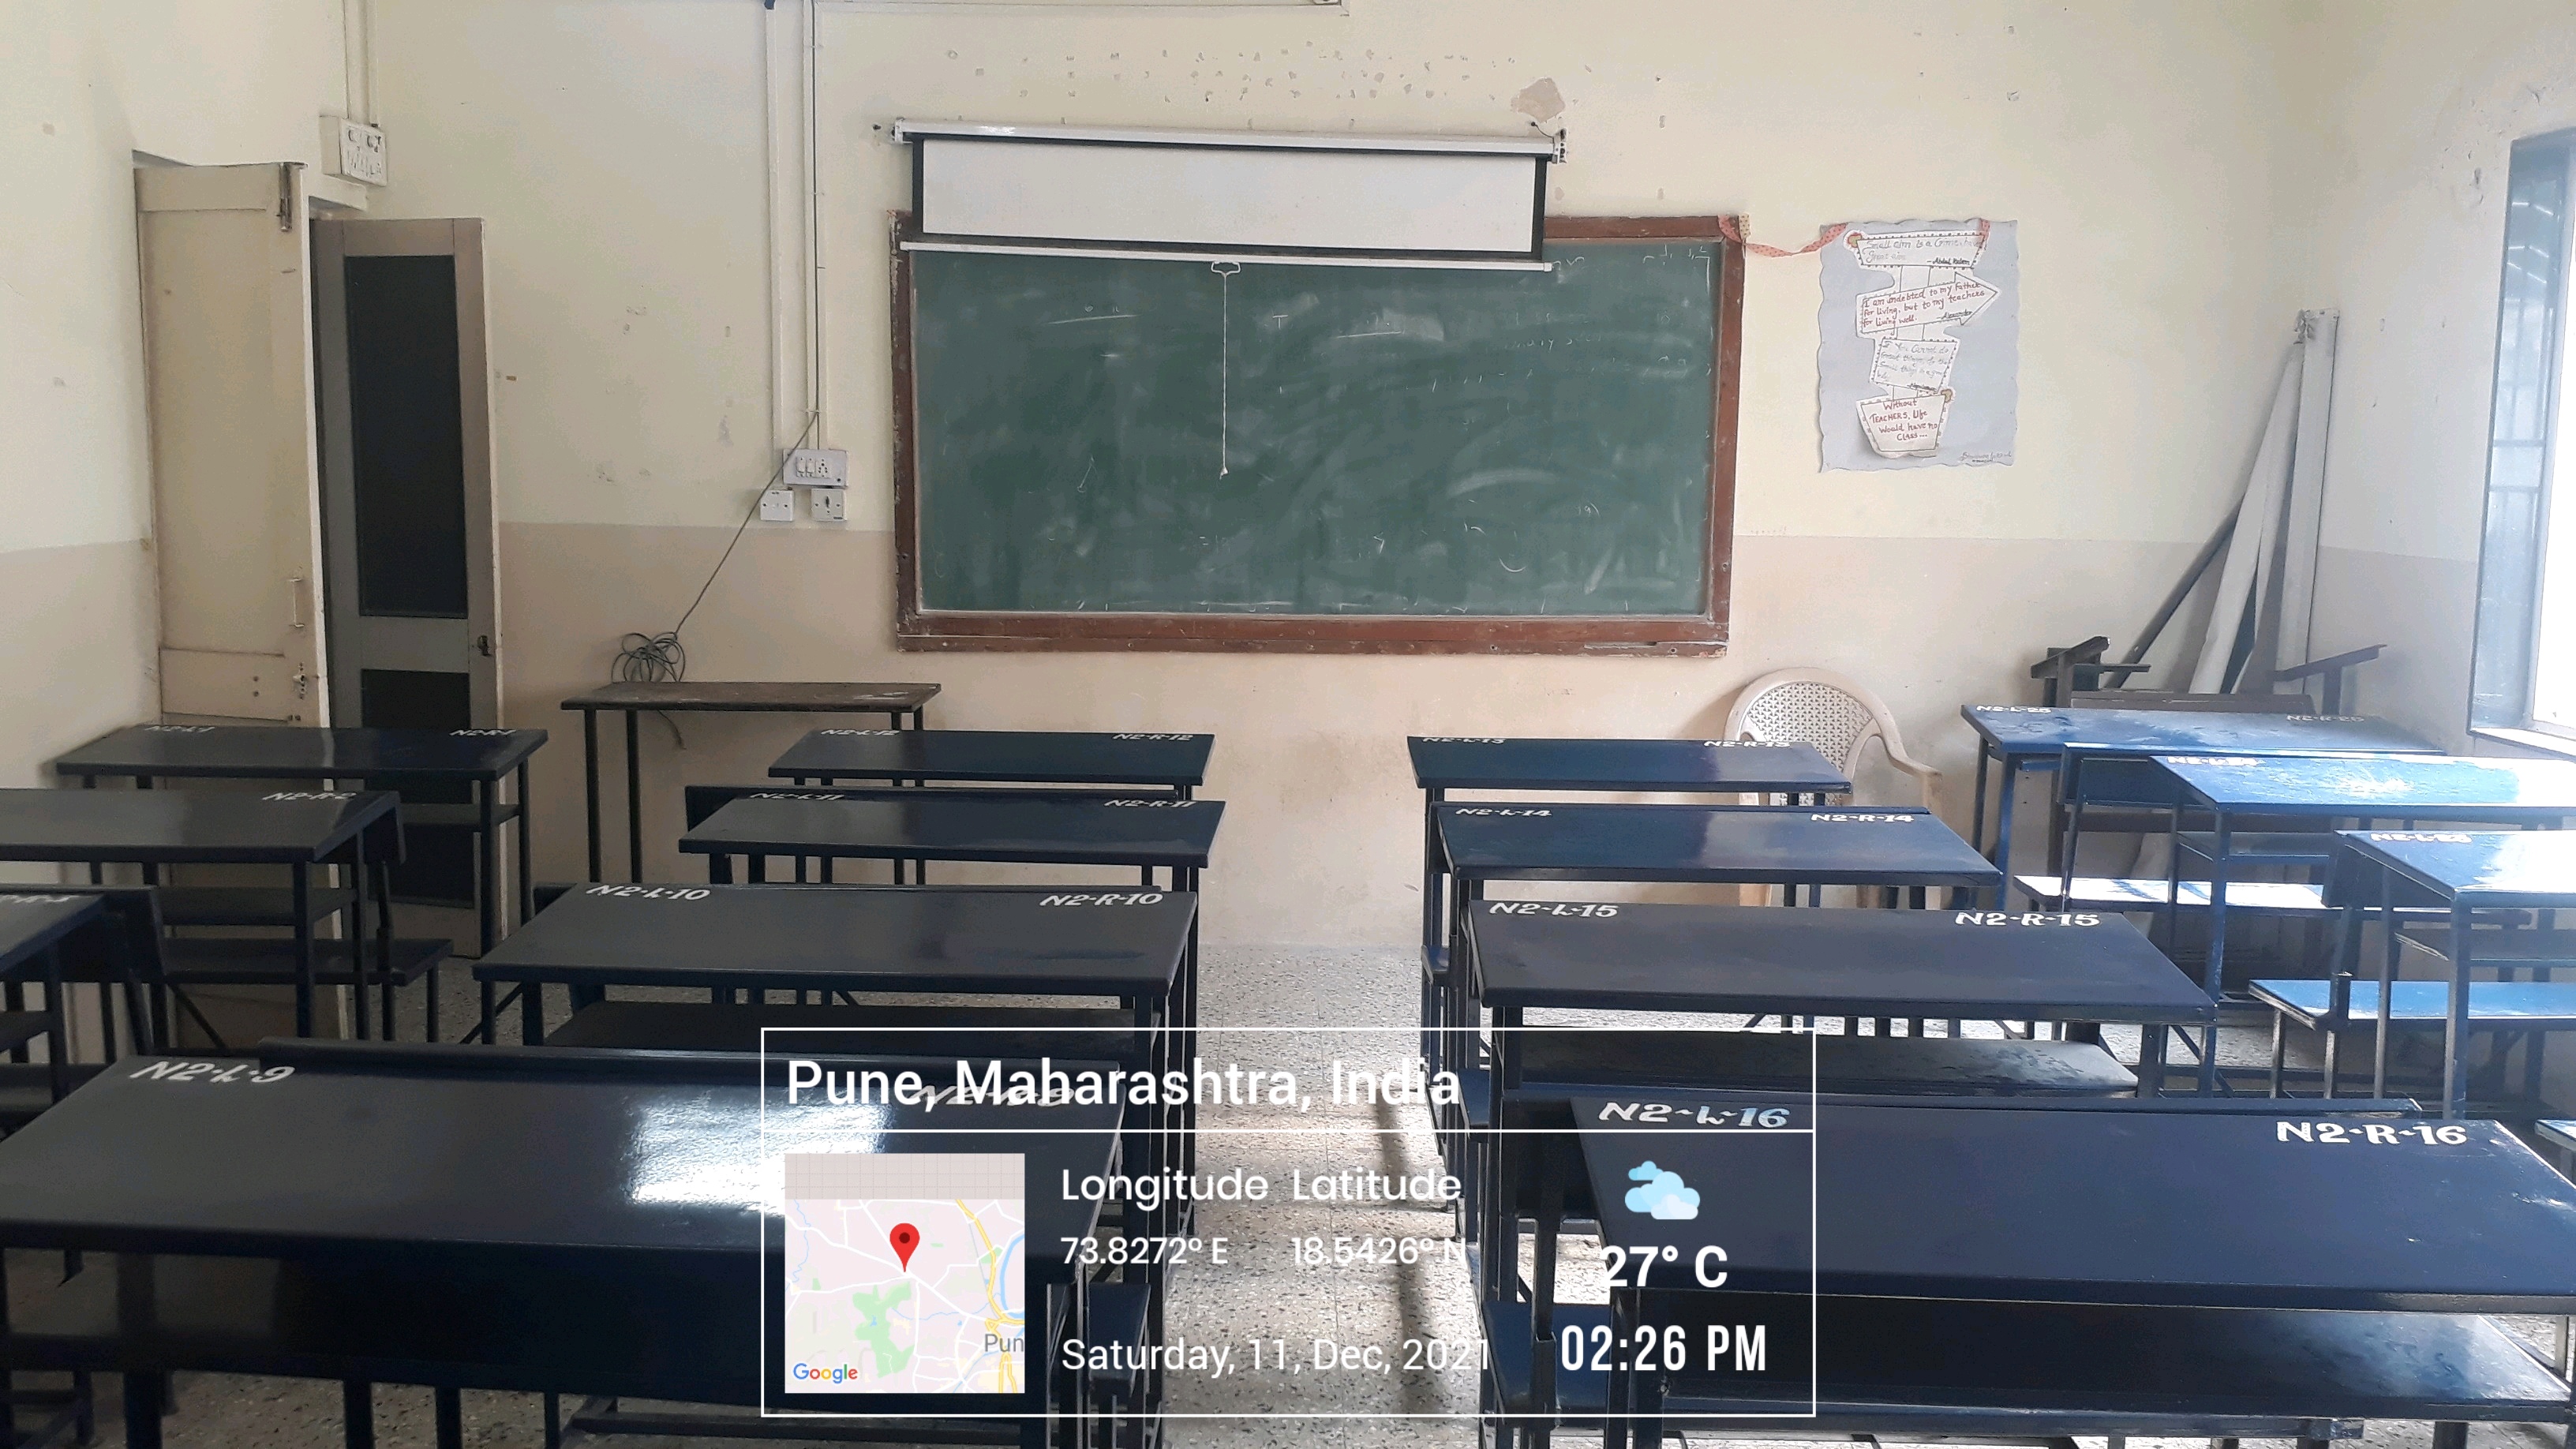 Classroom 3